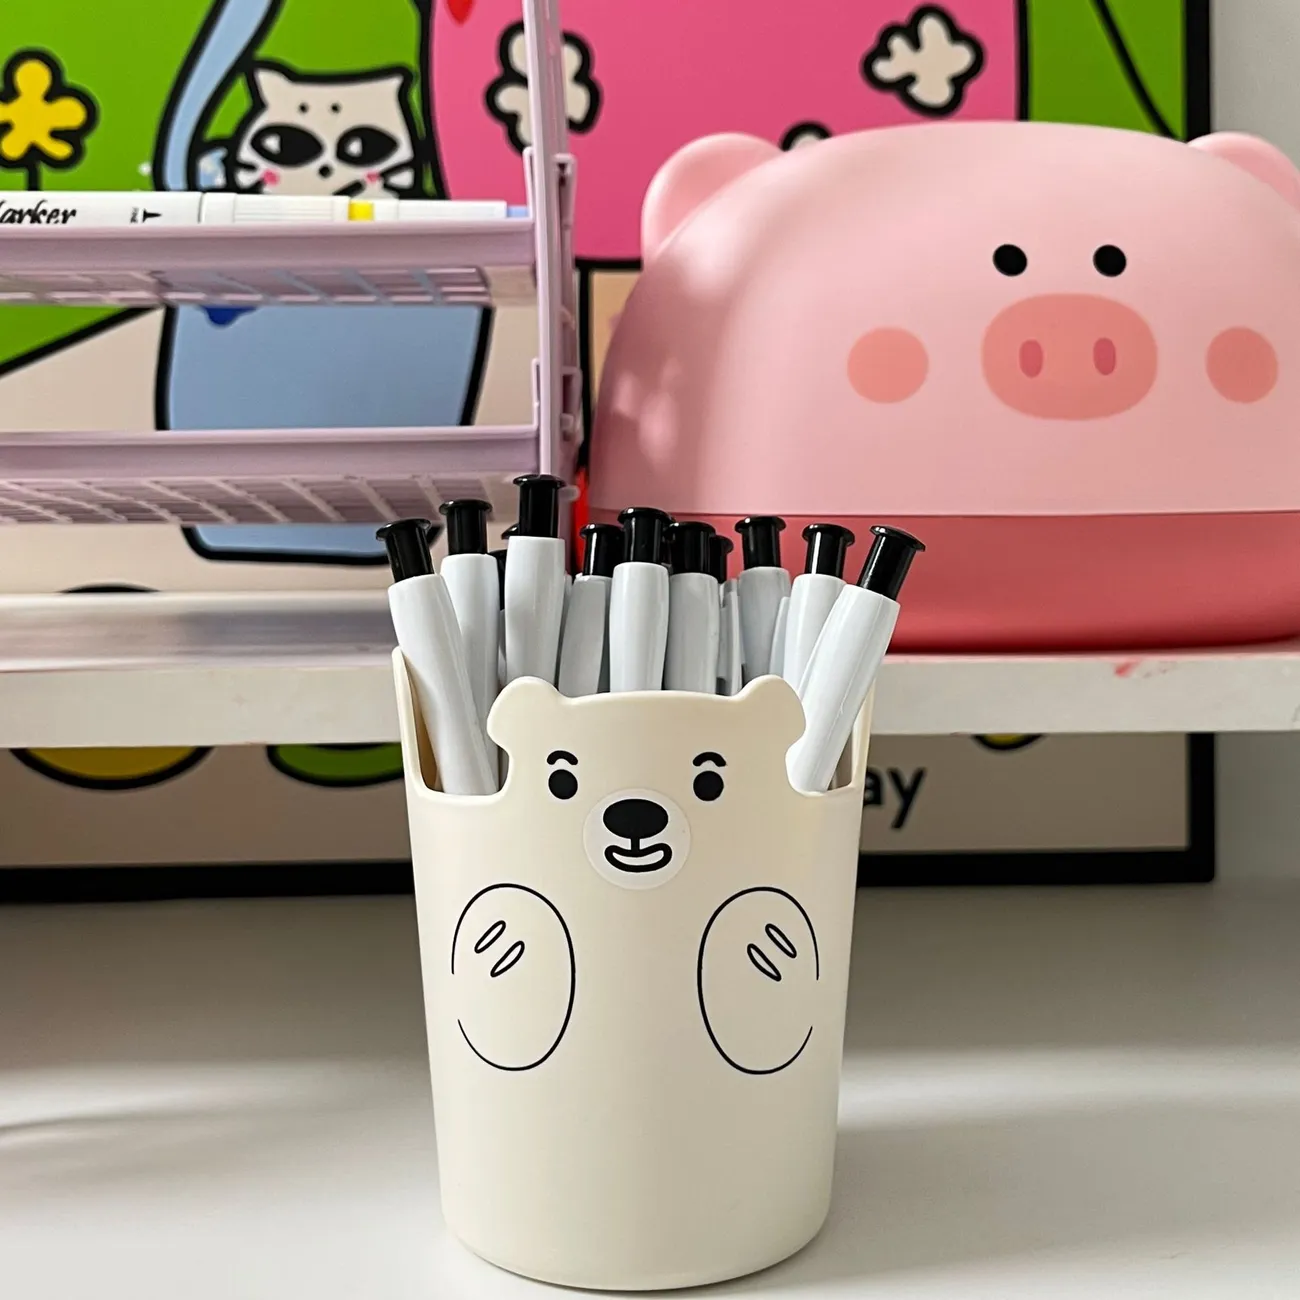 Adorable Bear Pen Holder - Multi-functional Desk Organizer for Office, Makeup, and Art Supplies  big image 1